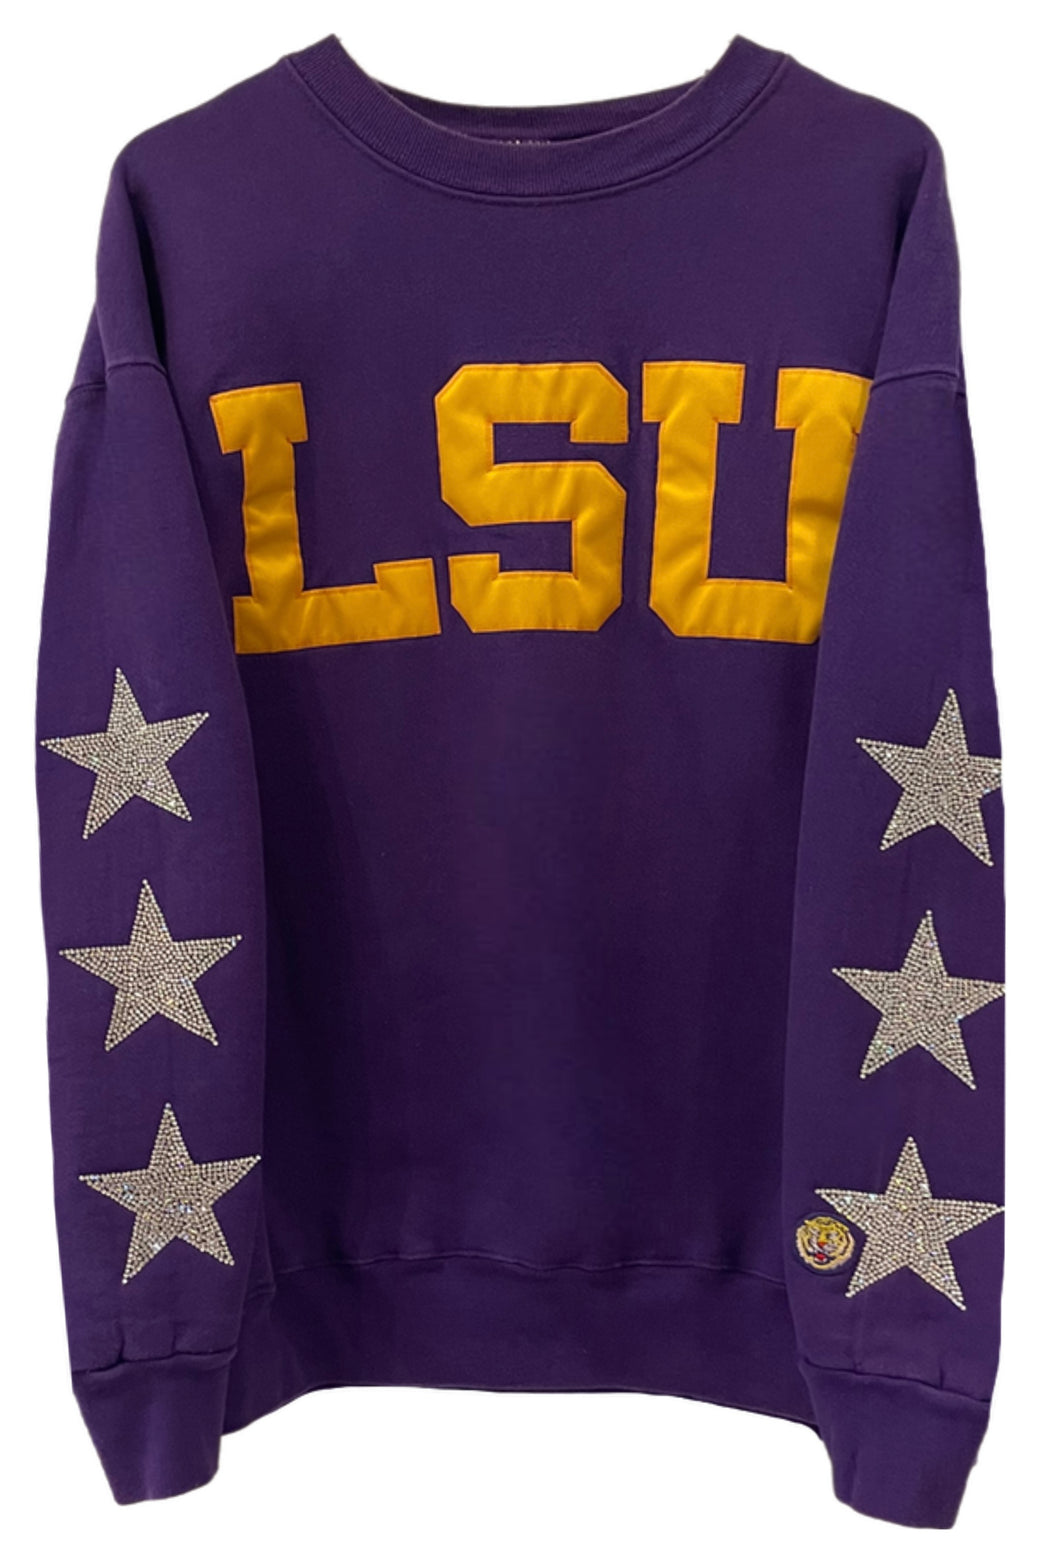 Louisiana State University, LSU Tigers One of a KIND Vintage Sweatshirt with Three Crystal Star Design